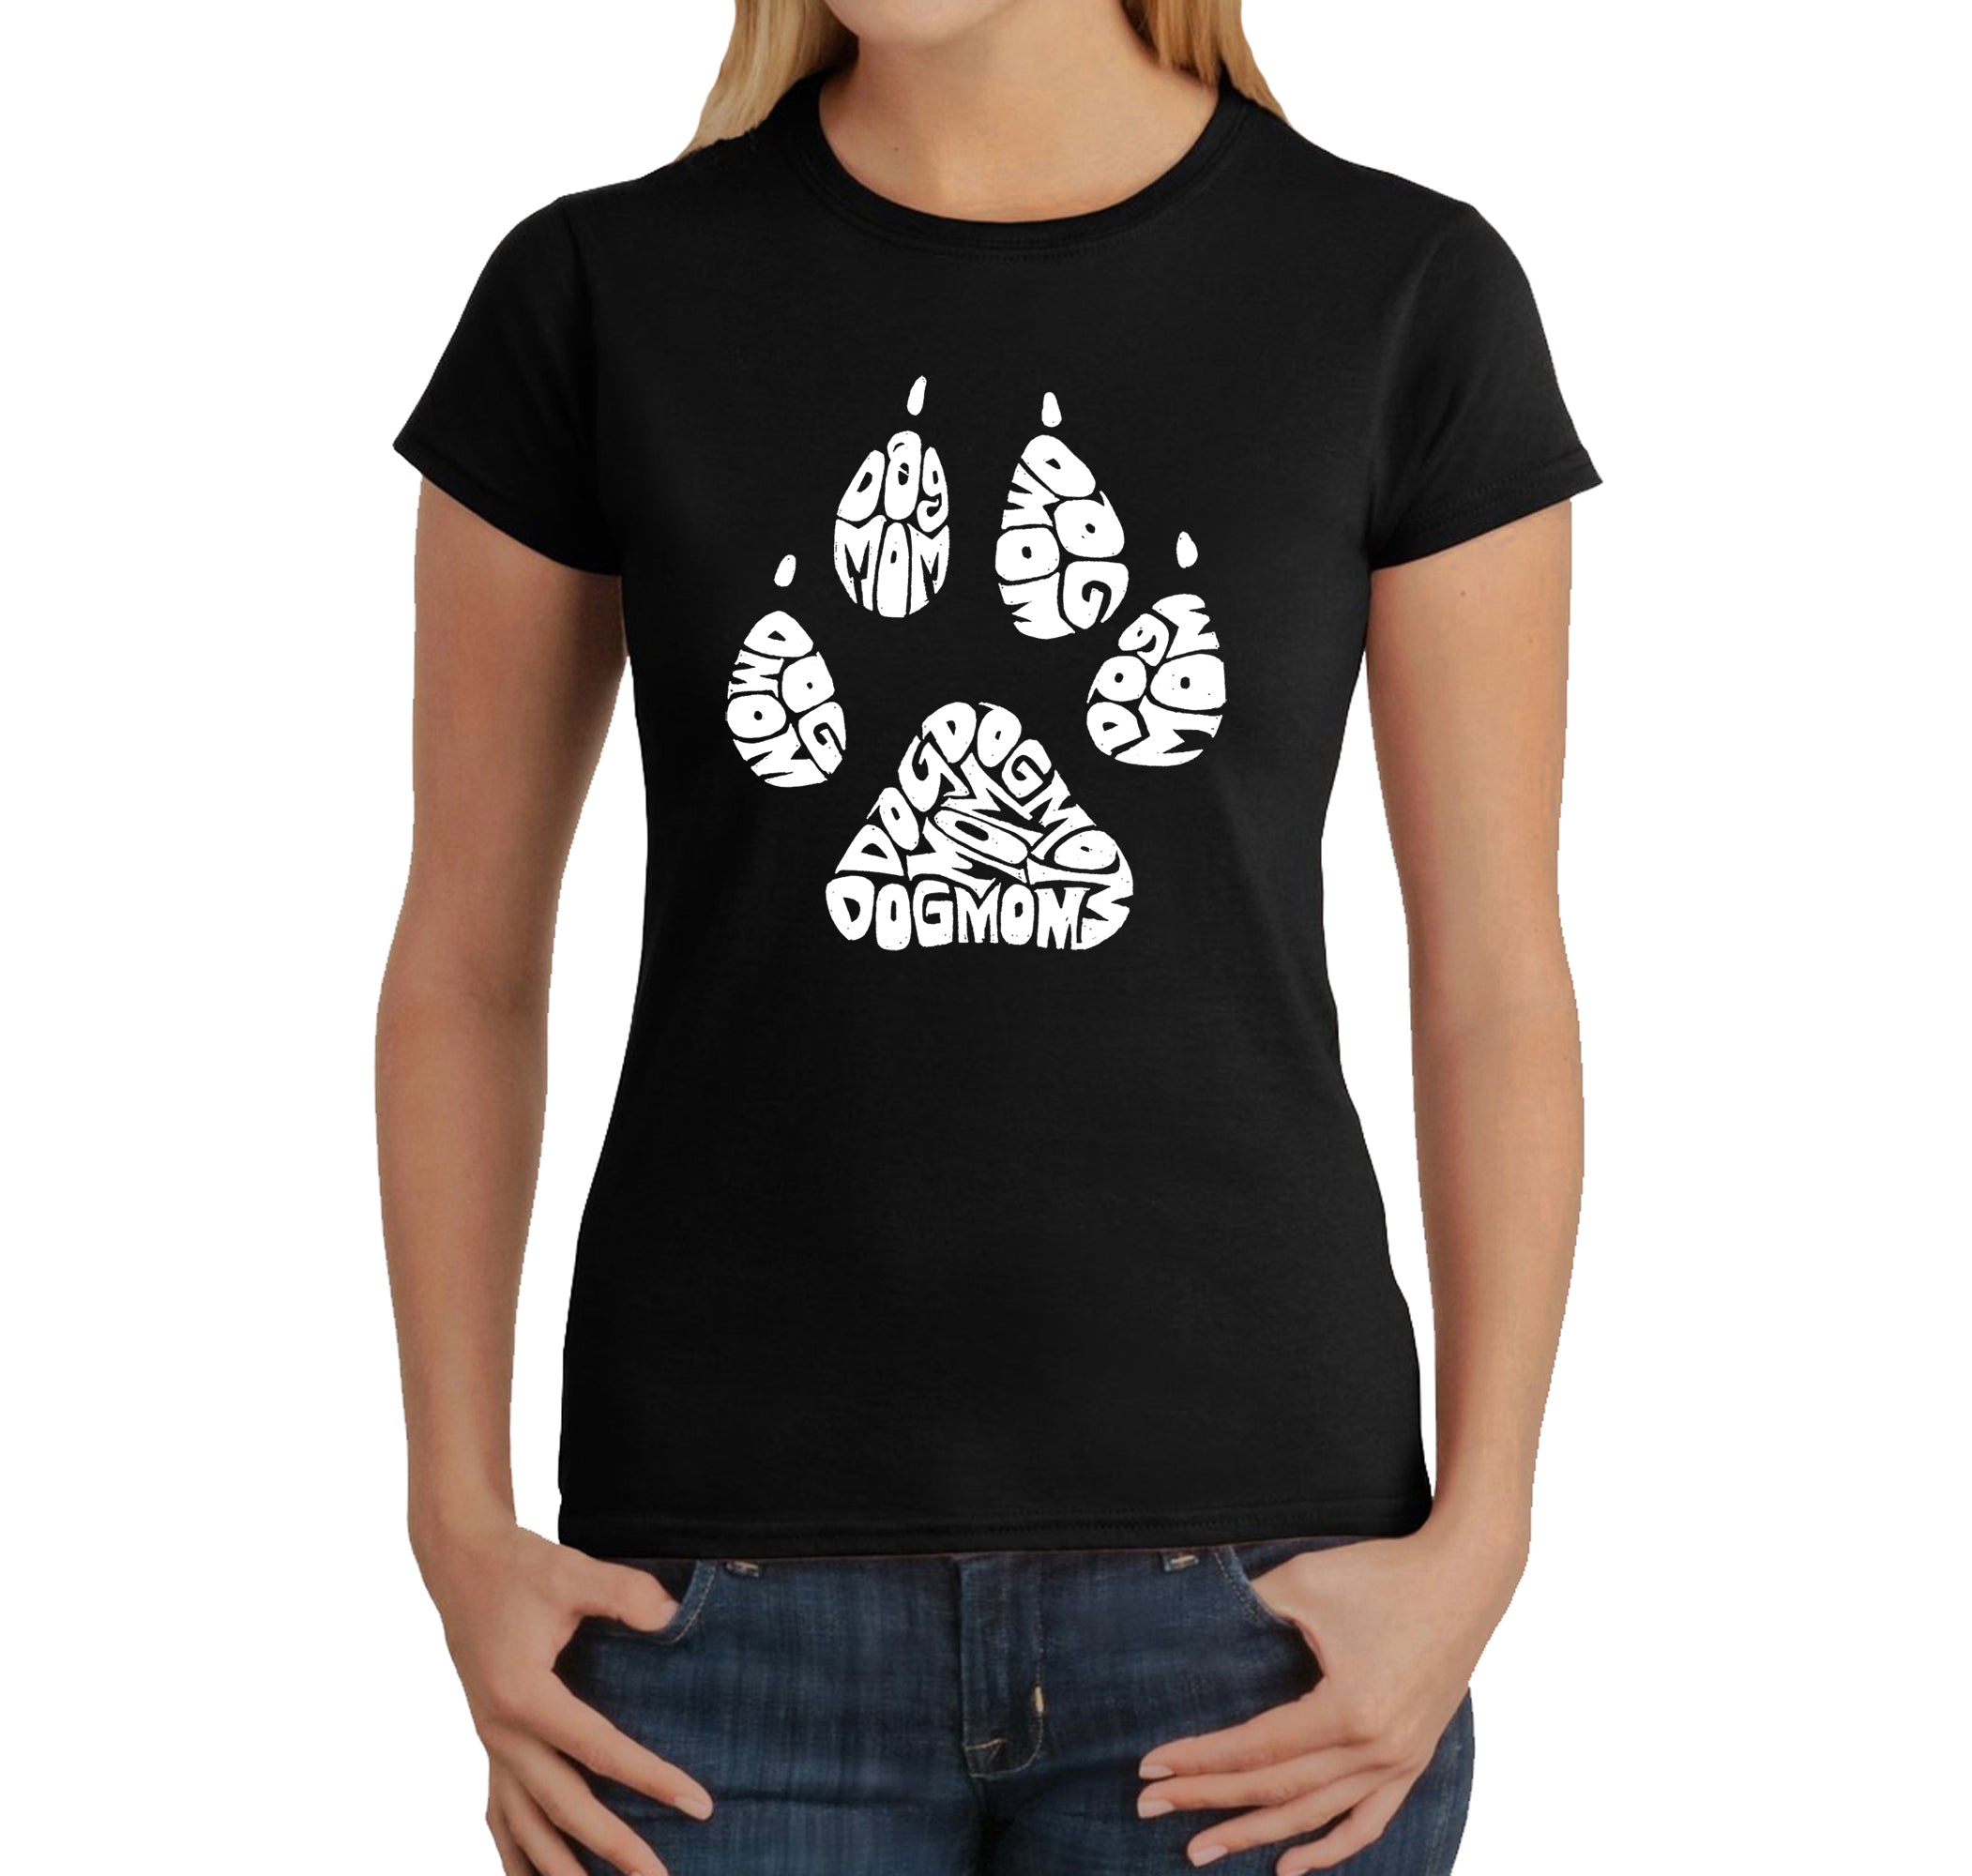 Dog Mom - Women's Word Art T-Shirt - Black - Medium